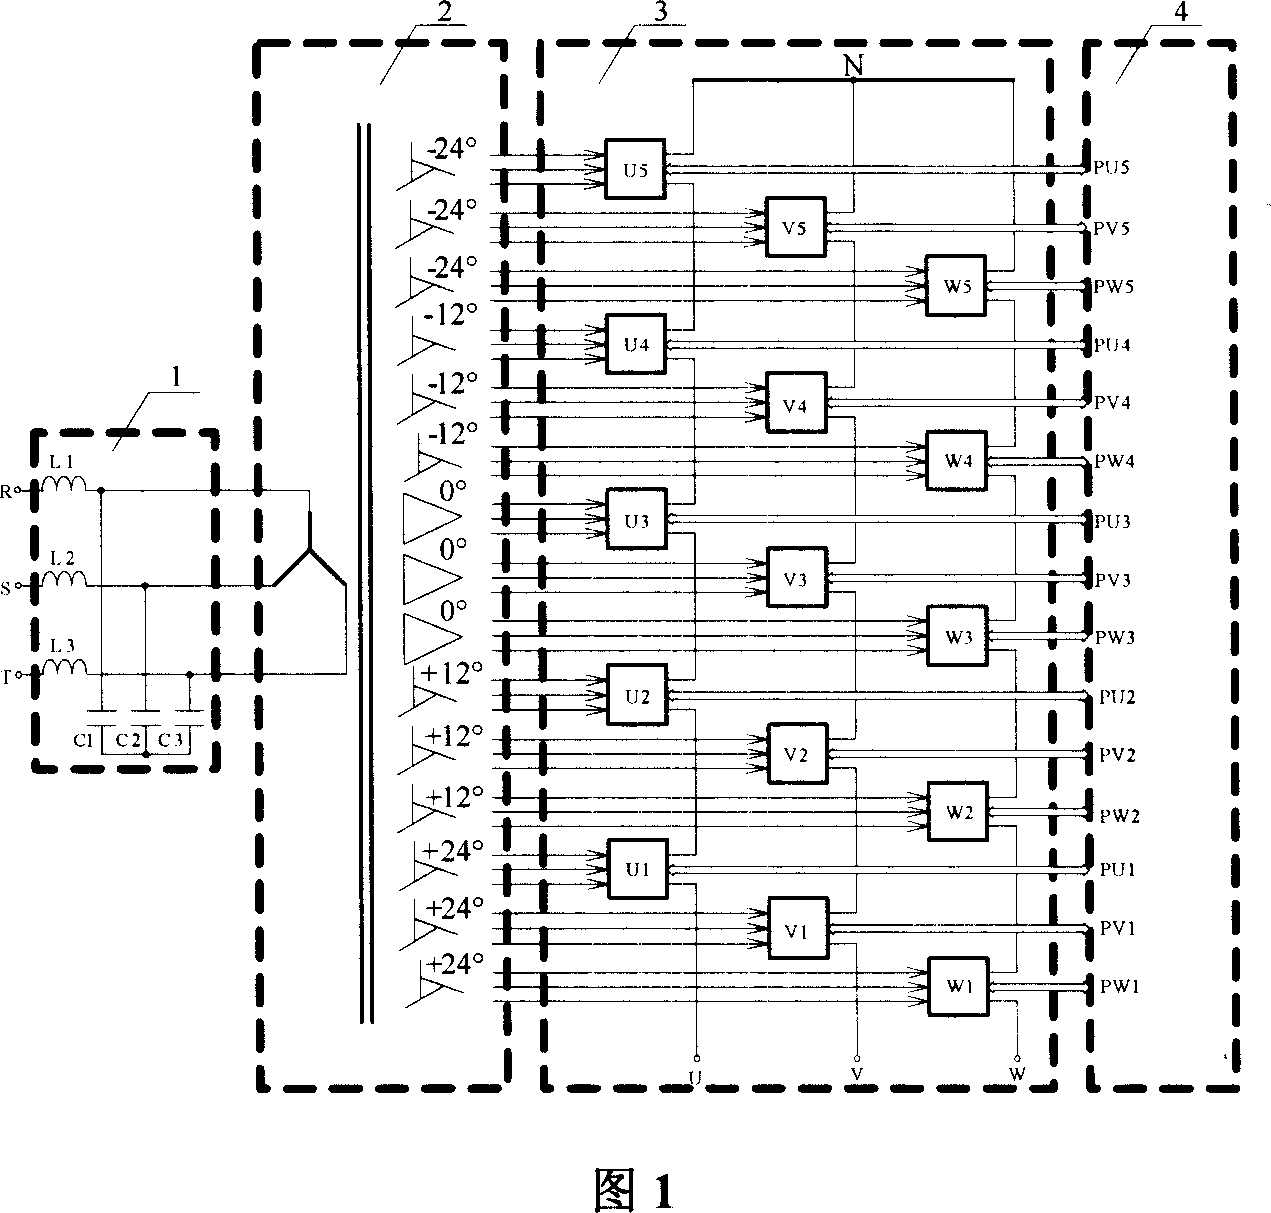 Cascaded multiple matrix converter